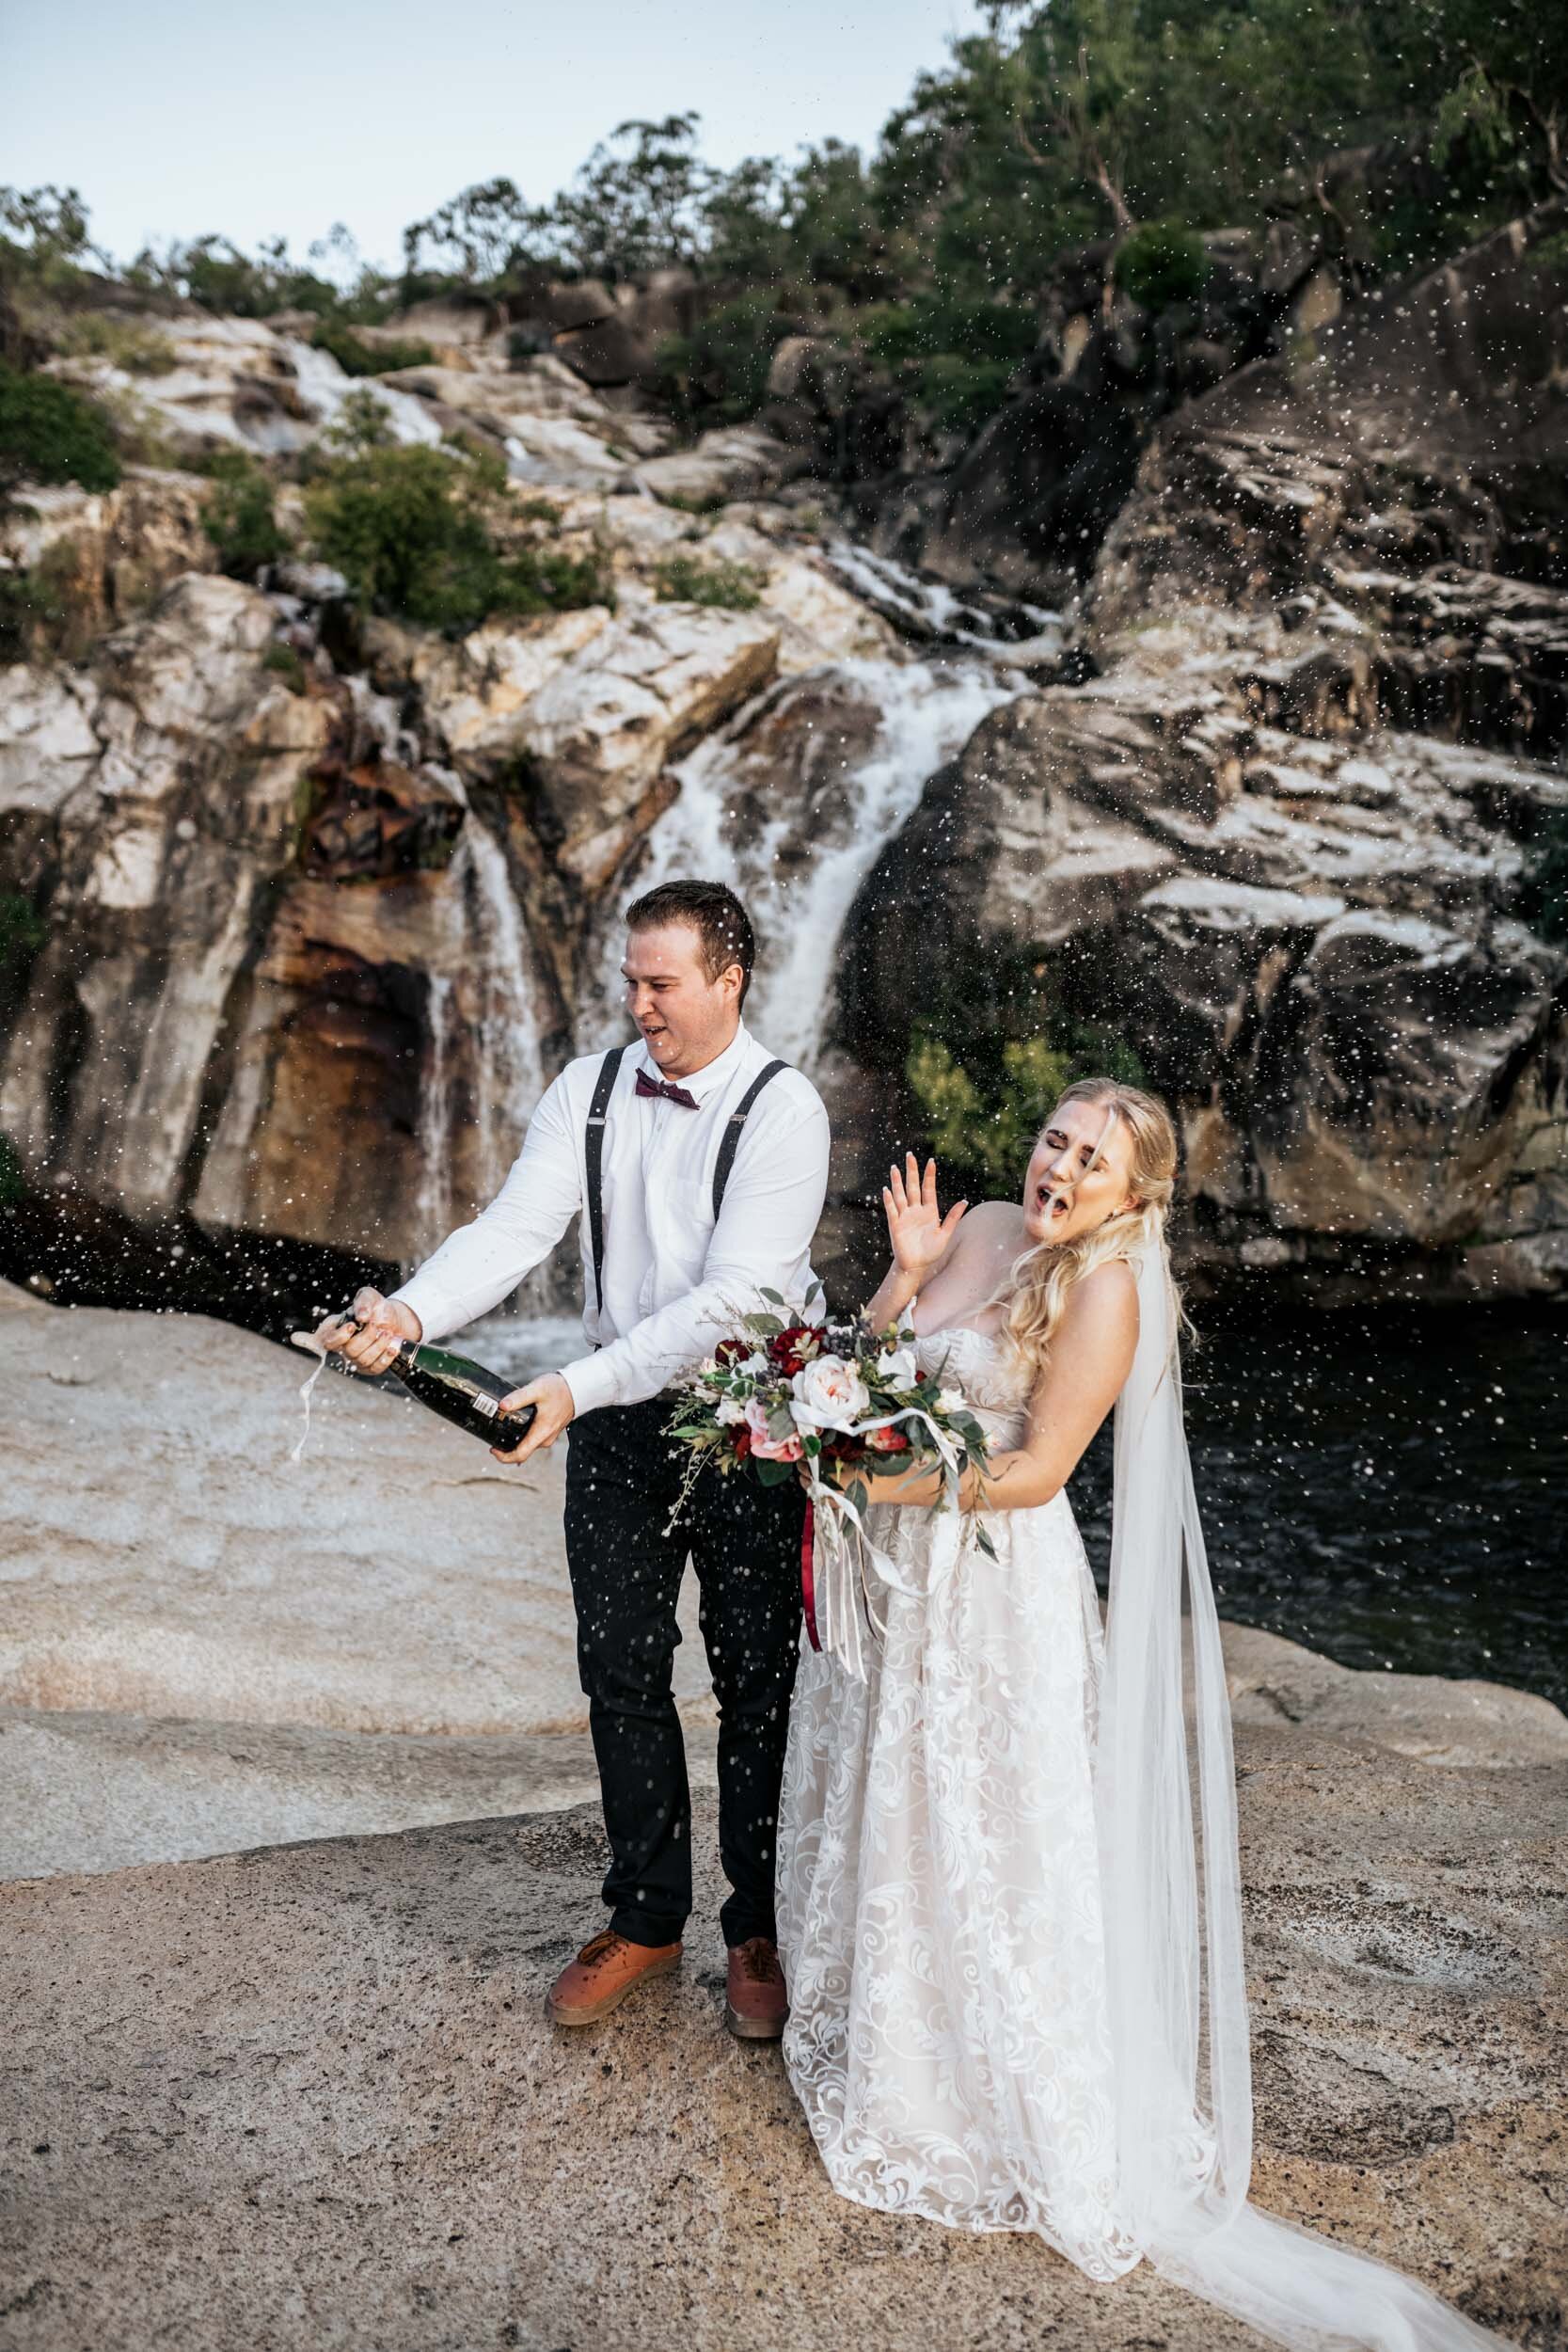 The Raw Photographer - Cairns Wedding Photographer - Queensland Adventure Elopment Photography - Emeral Creek Mareeba Tablelands-38.jpg